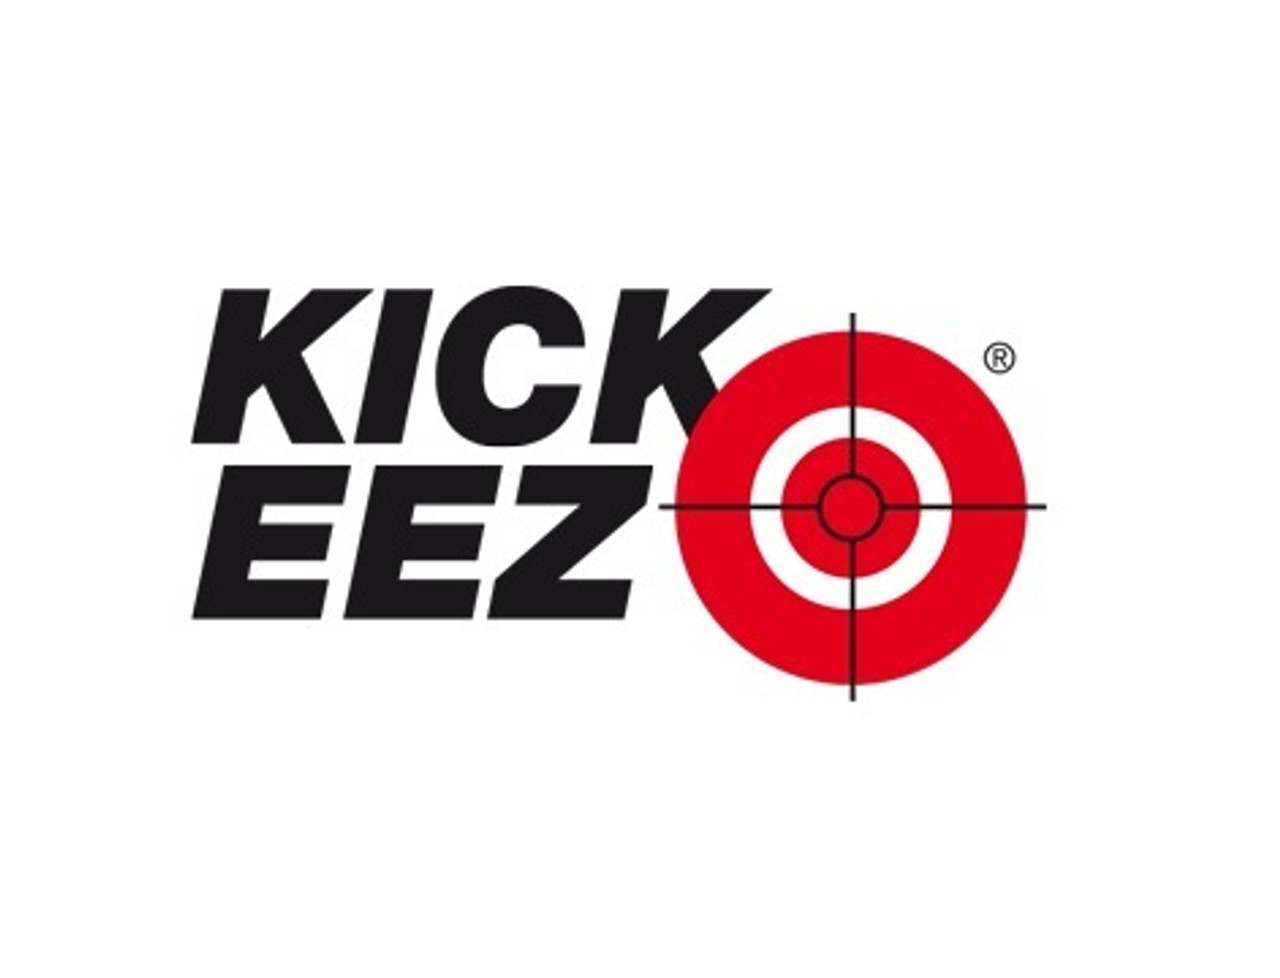 Kick-Eez